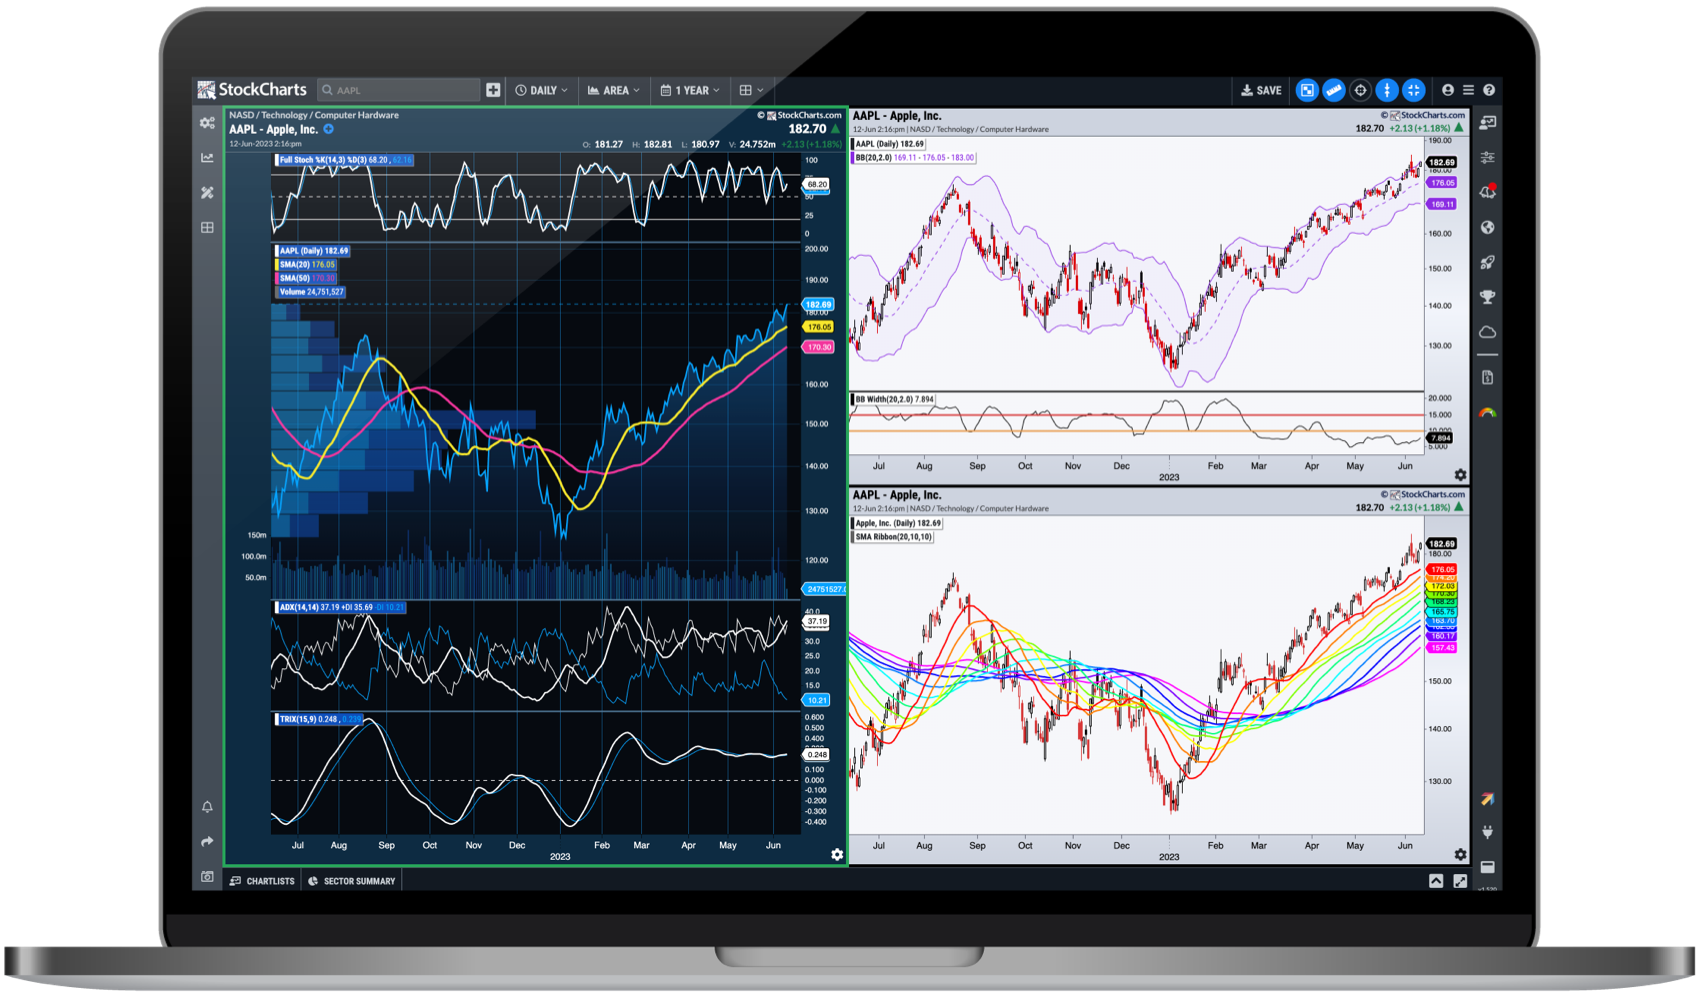 StockCharts Advanced Charting Platform